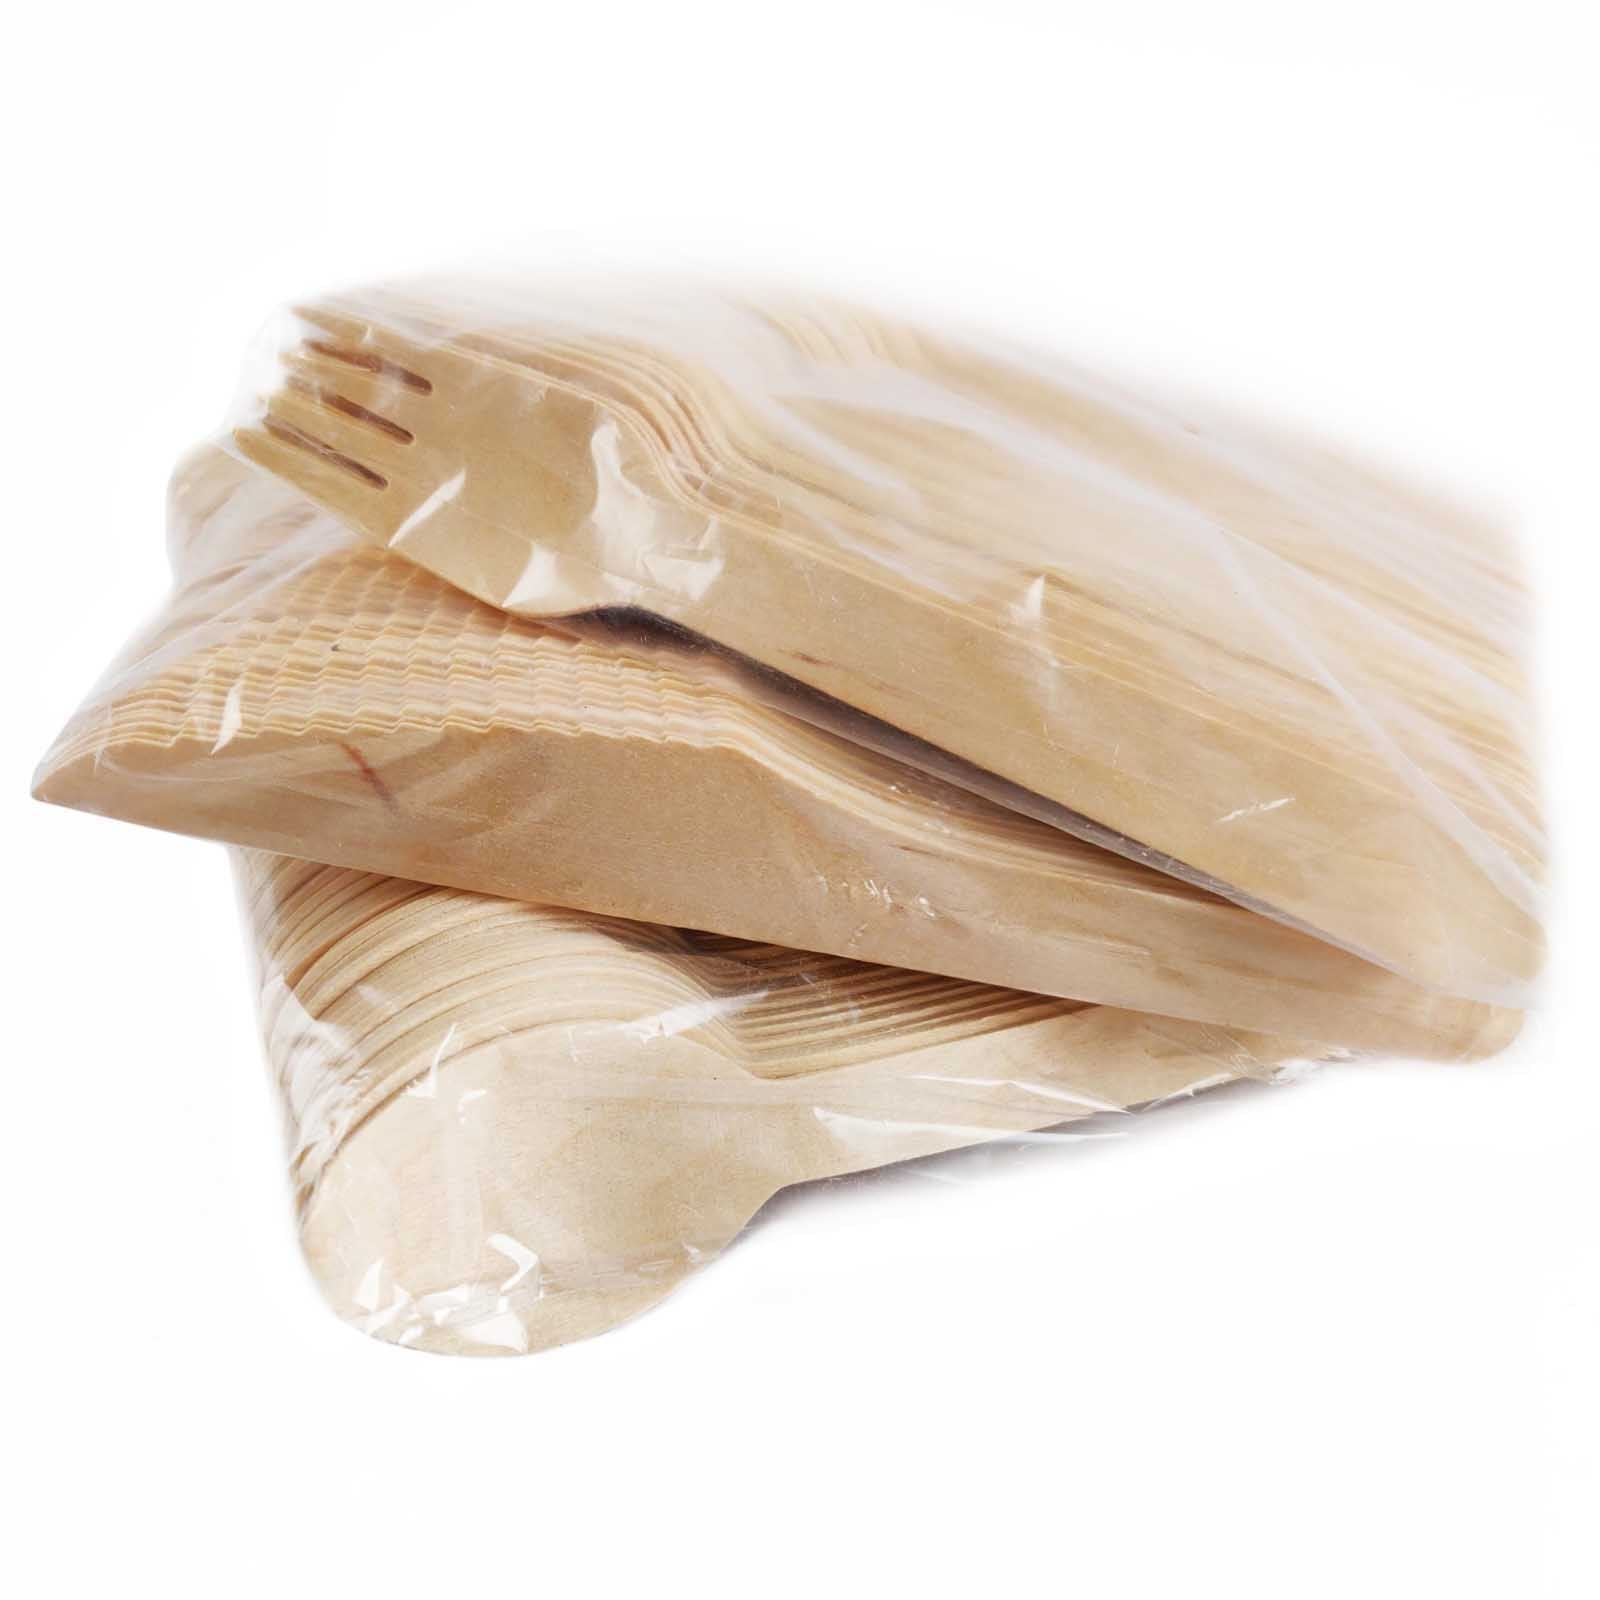 300 Piece Biodegradable Wooden Cutlery Set